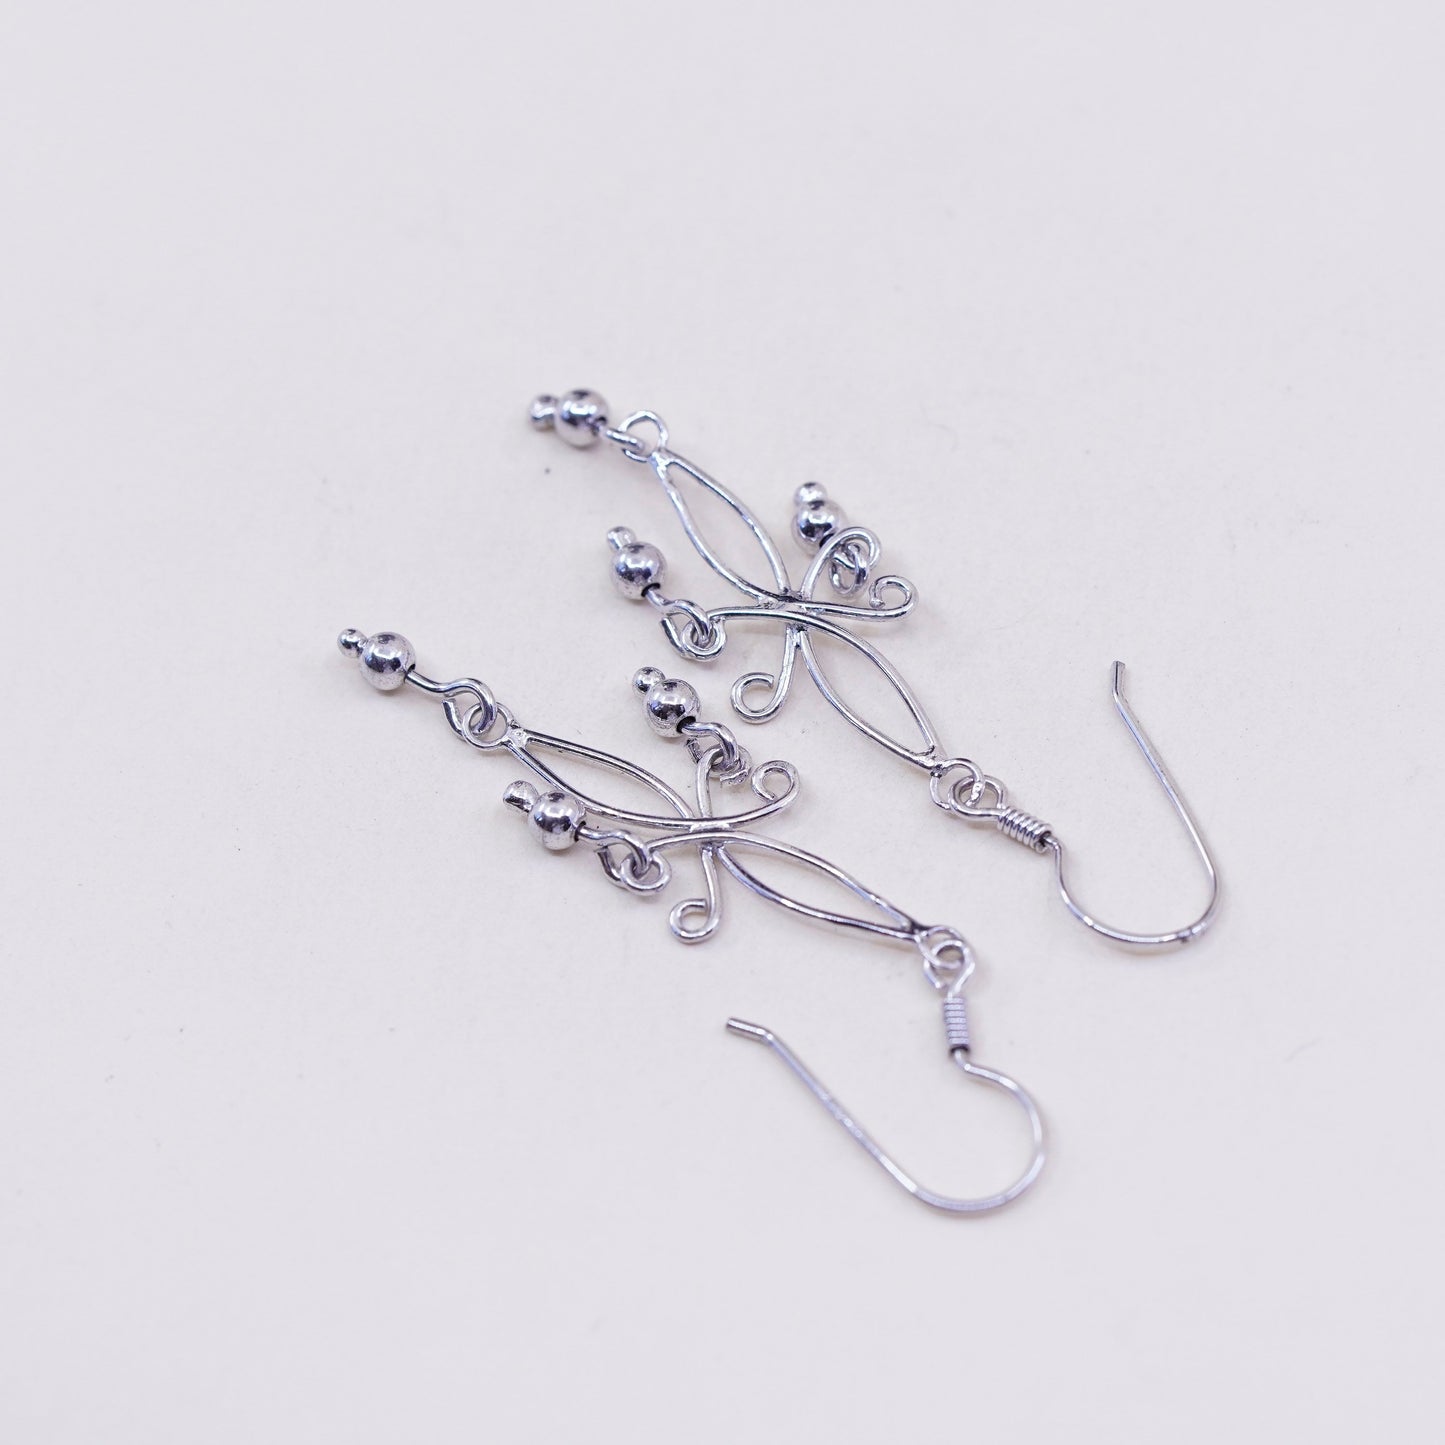 Vintage sterling silver handmade earrings, filigree 925 dangles